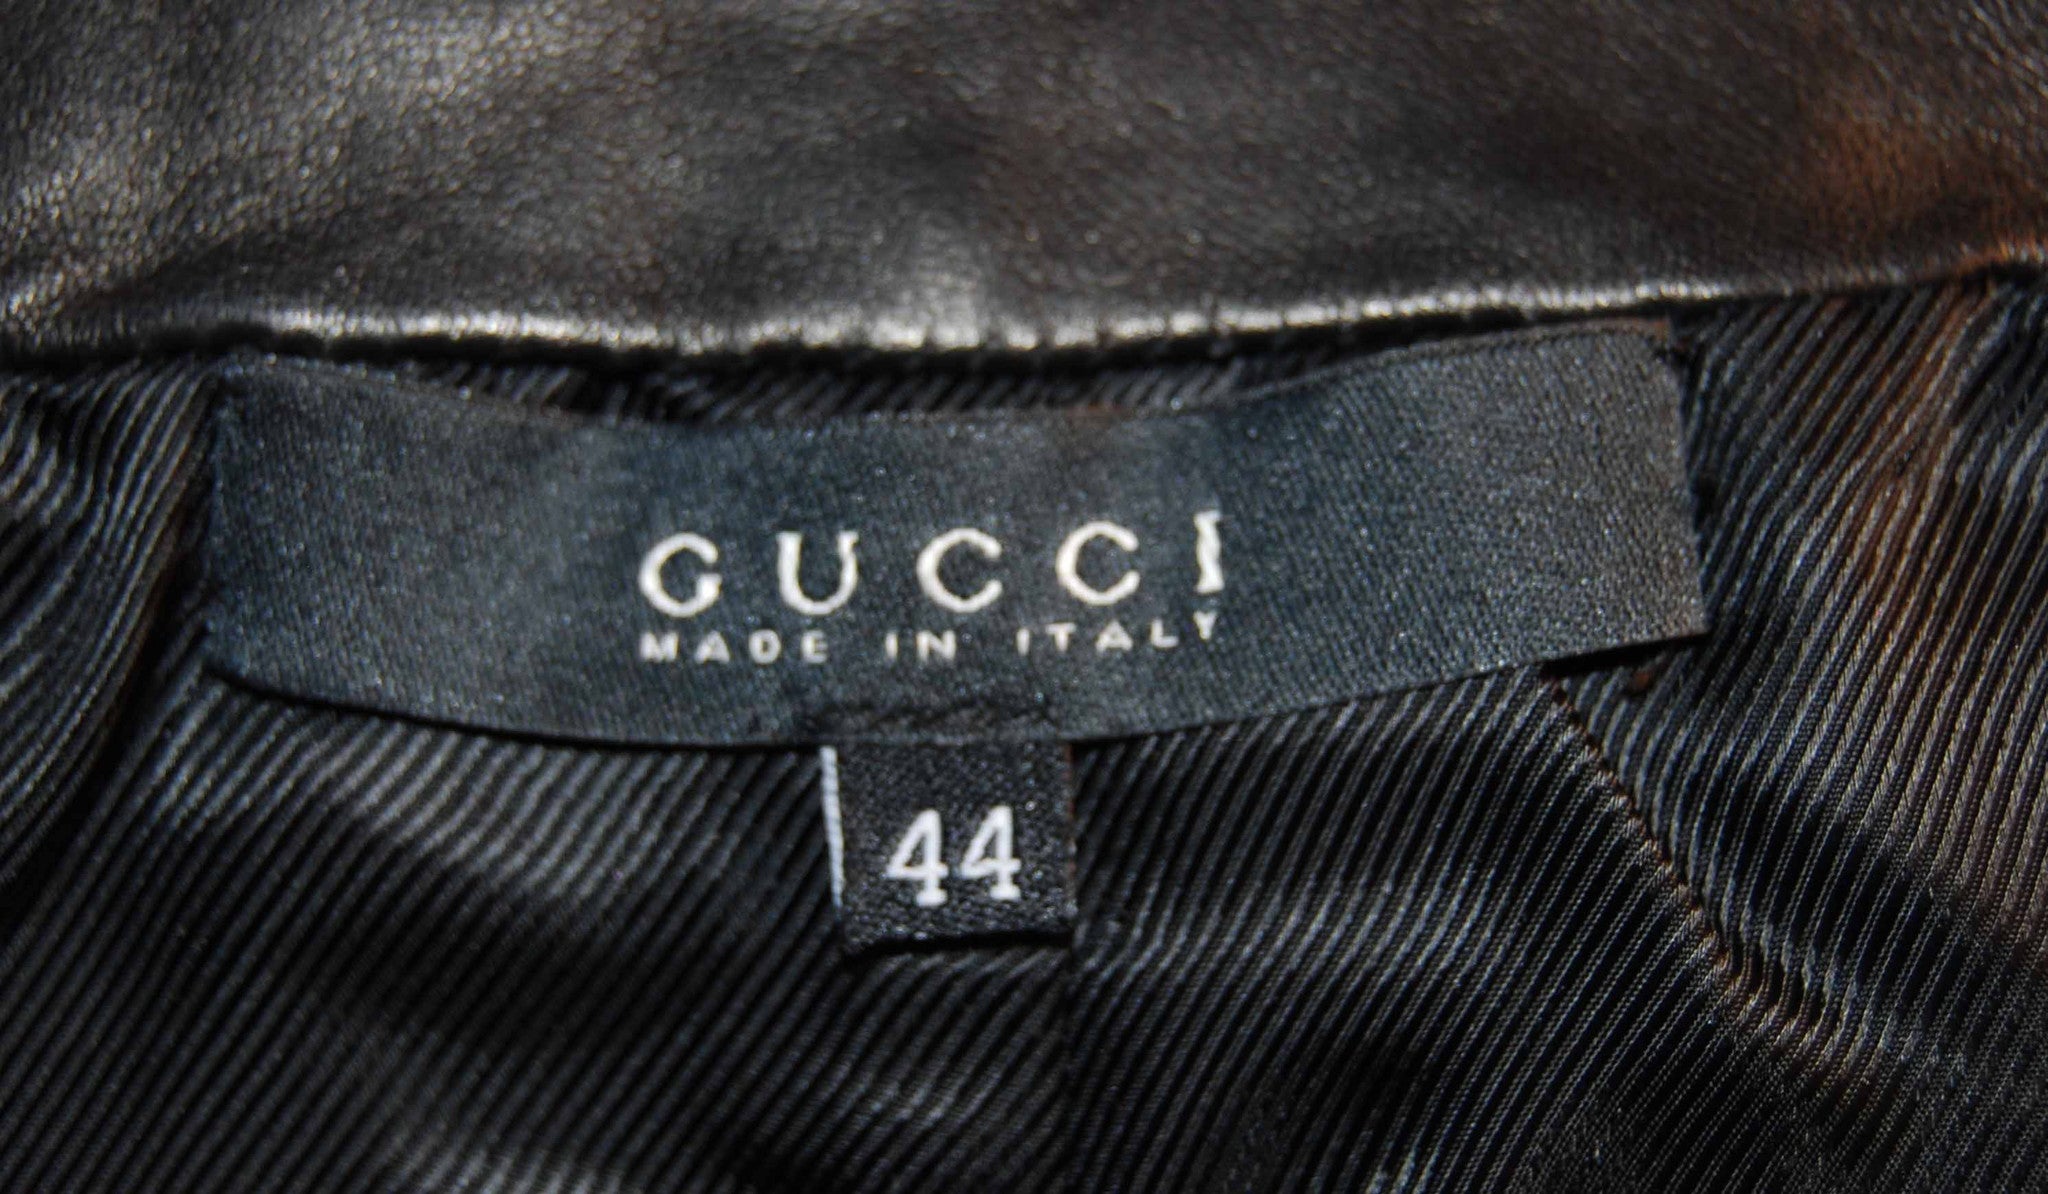 Tom Ford Gucci Leather Skirt - refashioner